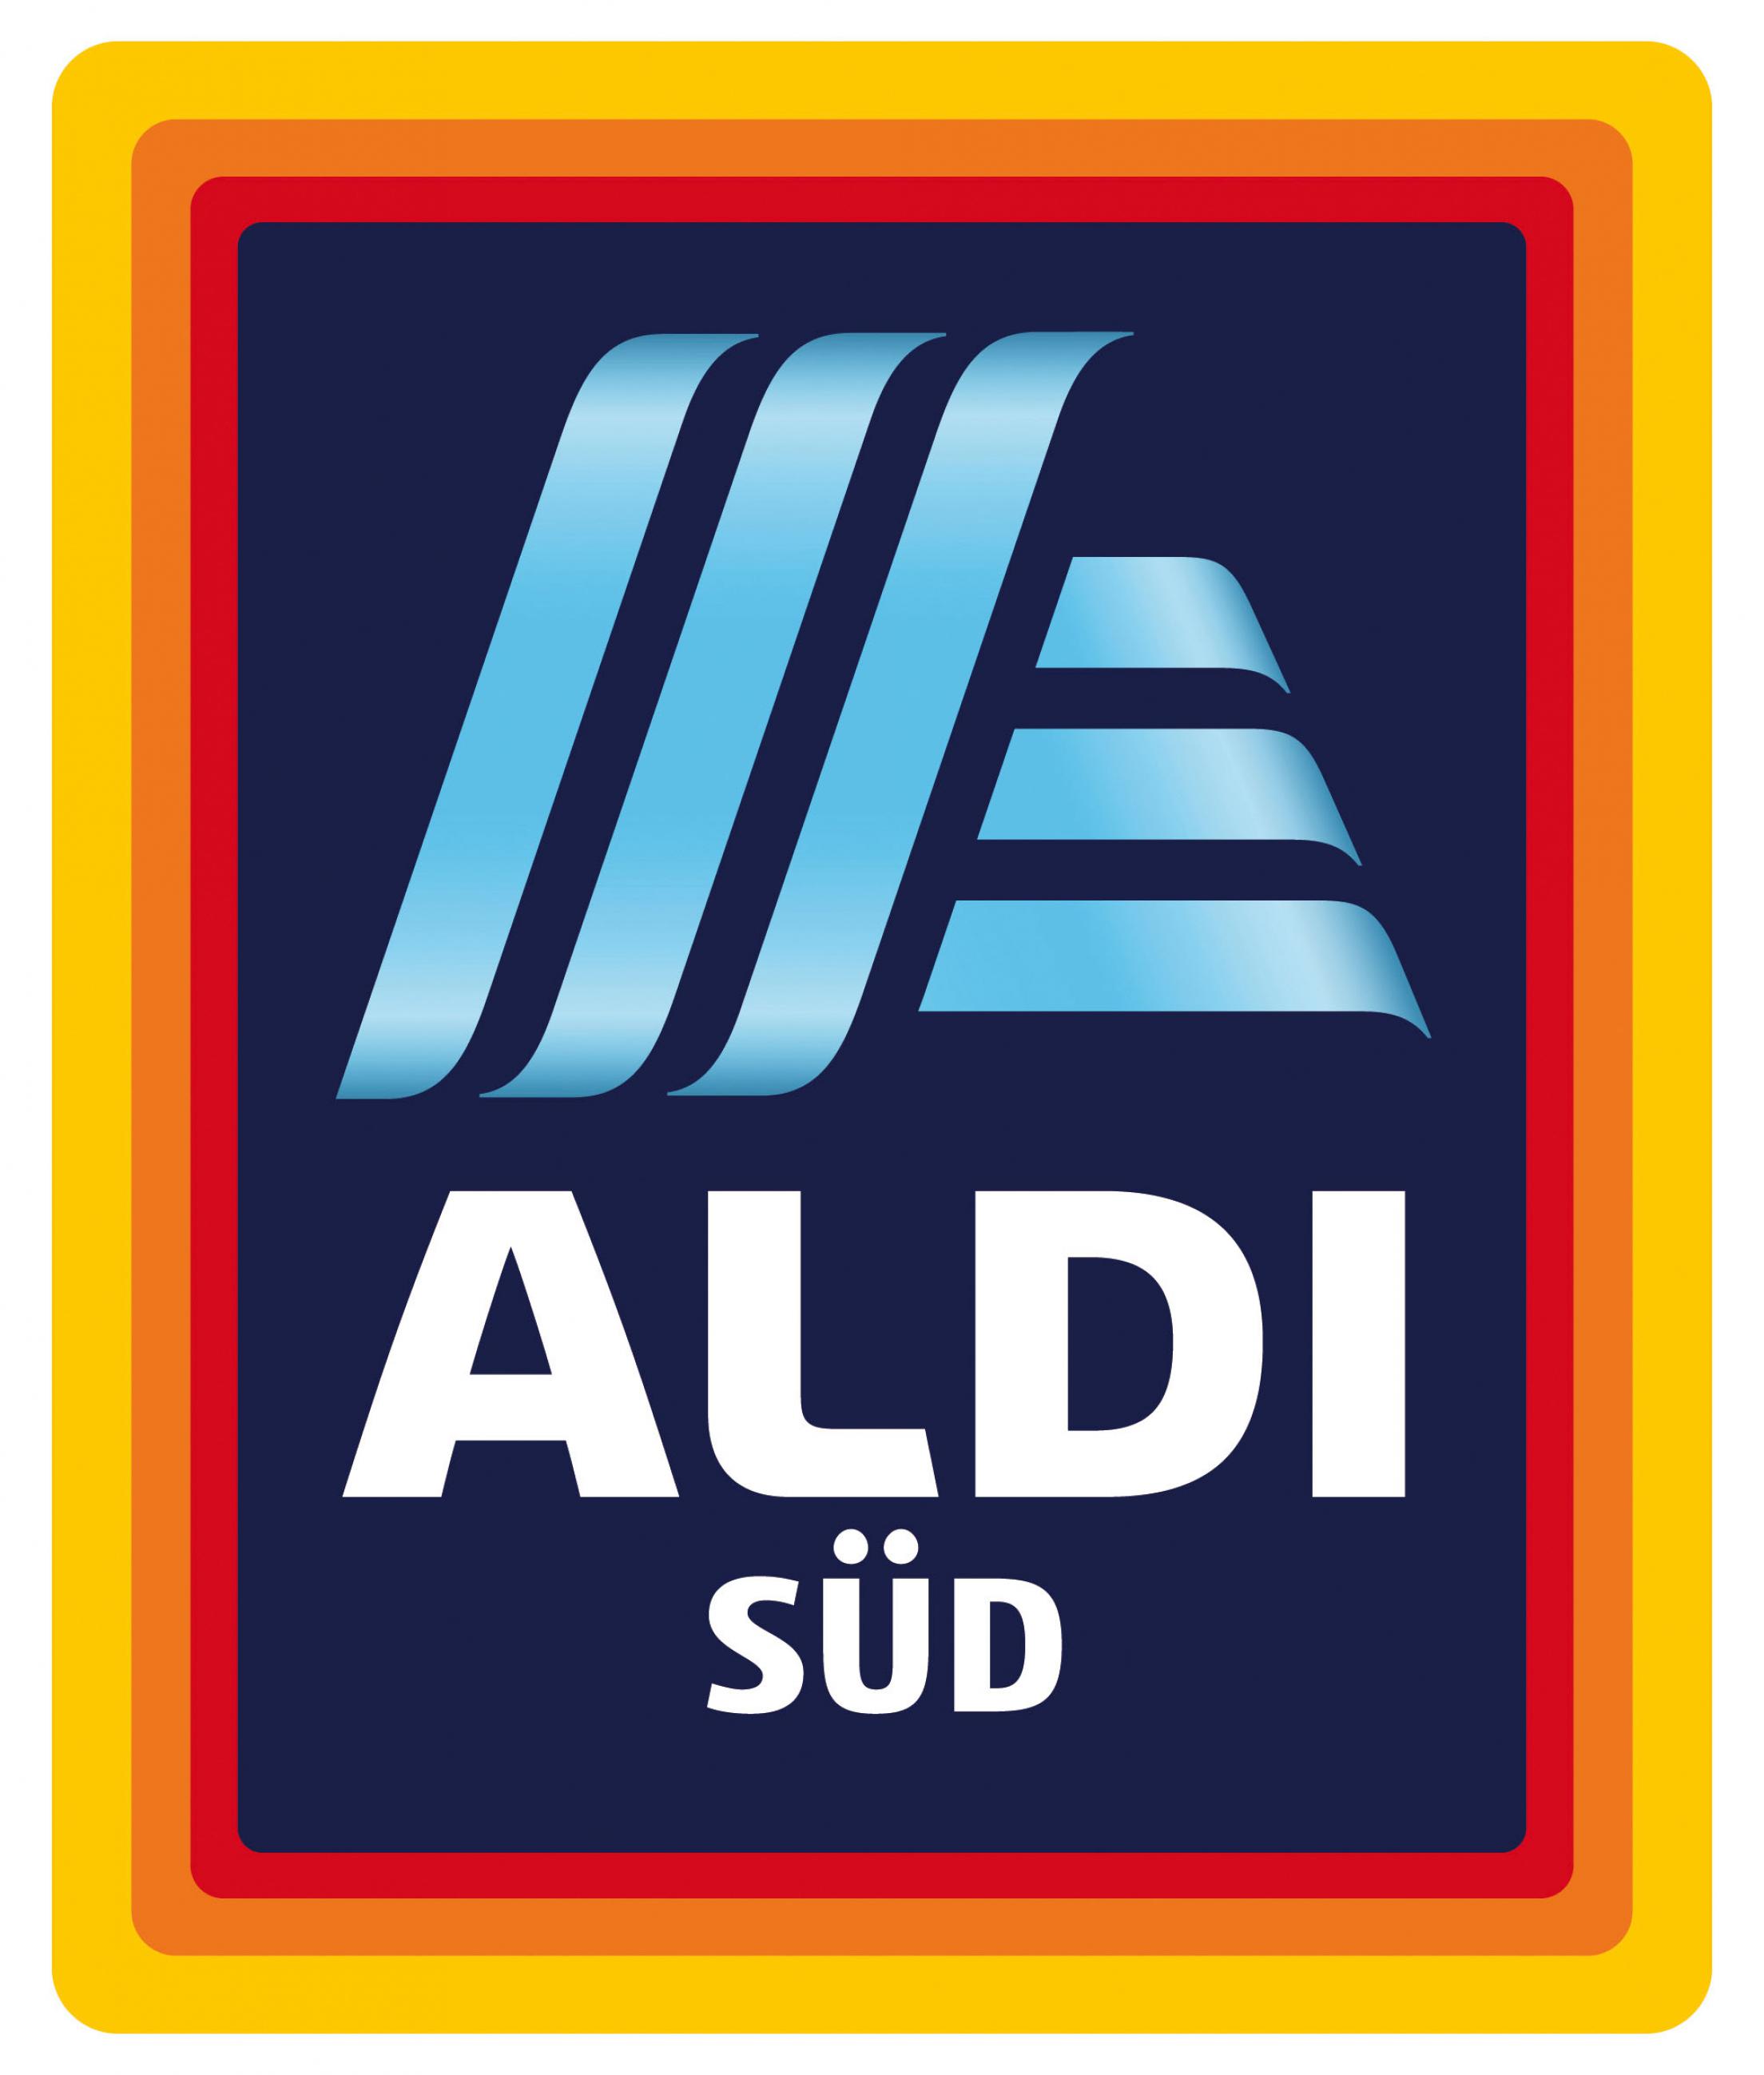 Logo van ALDI Süd laadpas